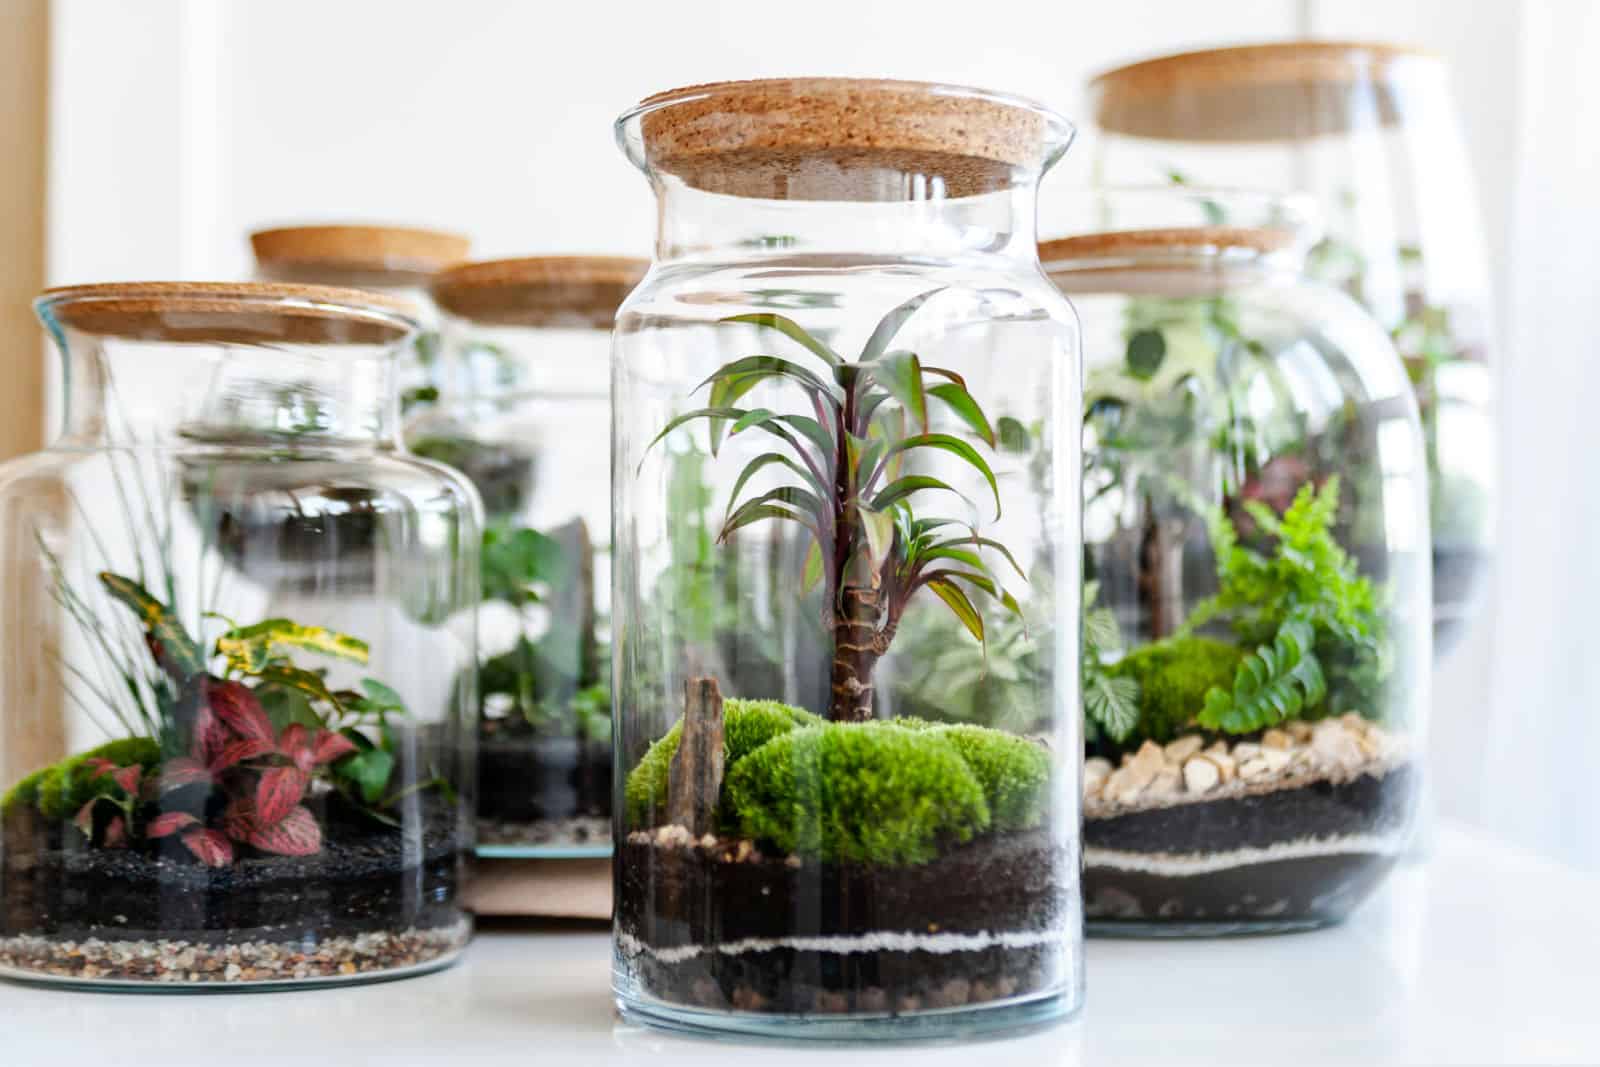 Small decoration plants in a glass bottlegarden terrarium bottle forest in a jar